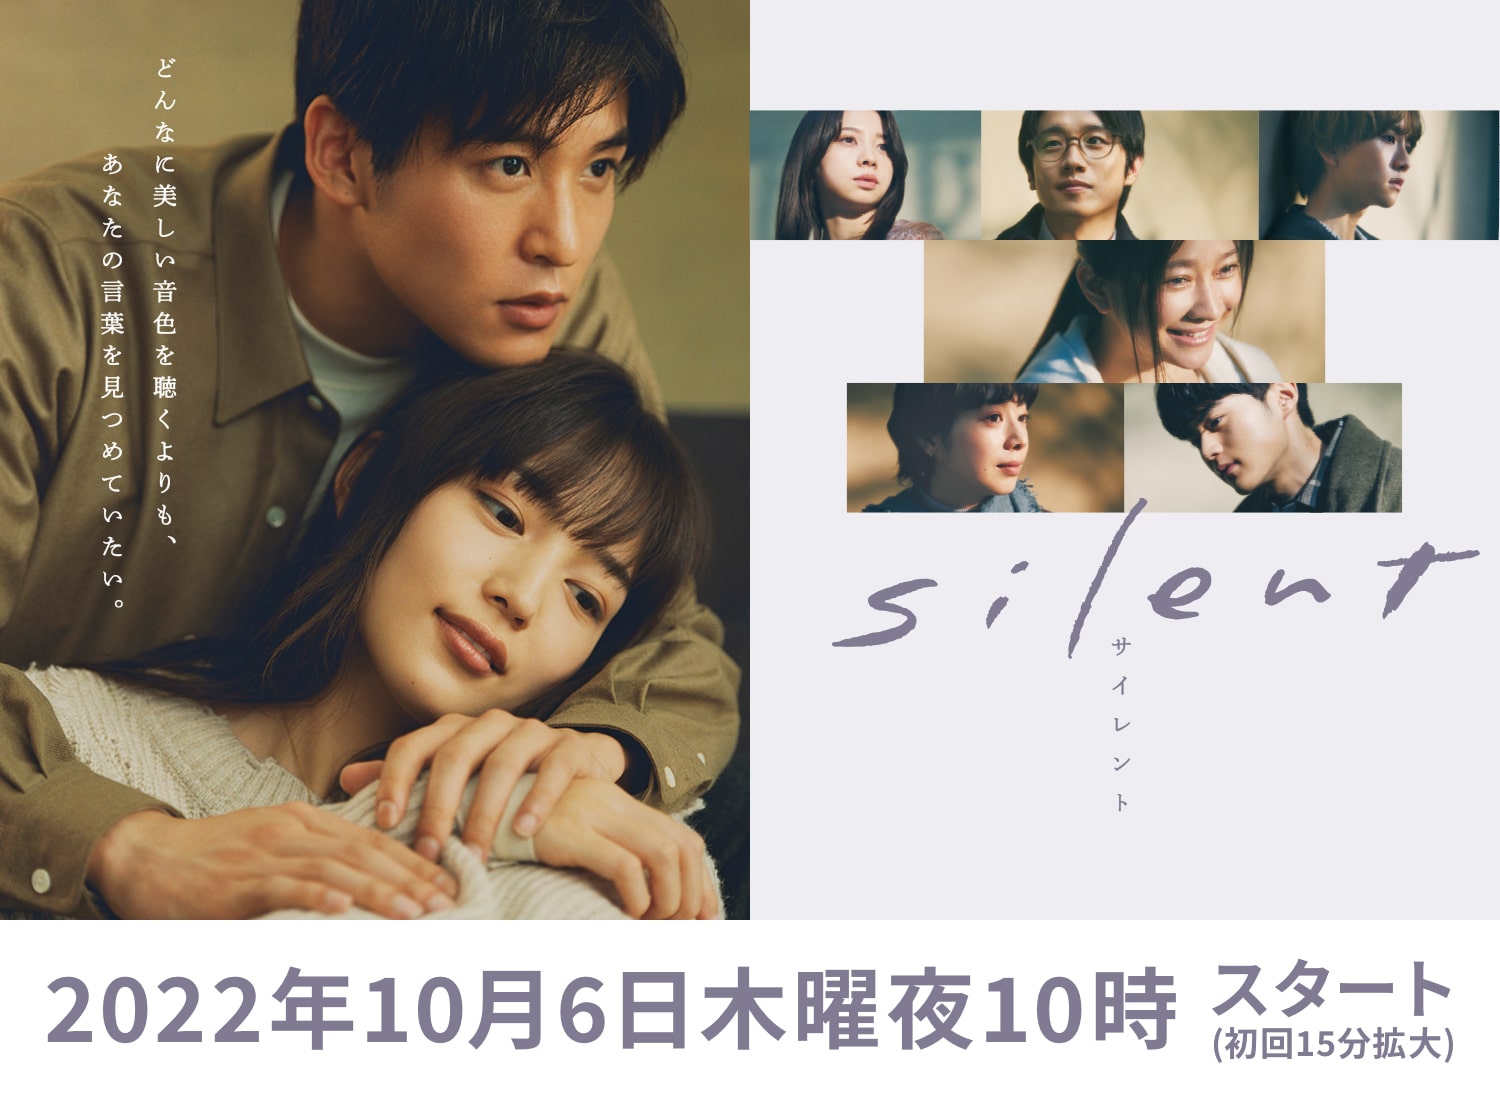 Silent (Japanese Drama)